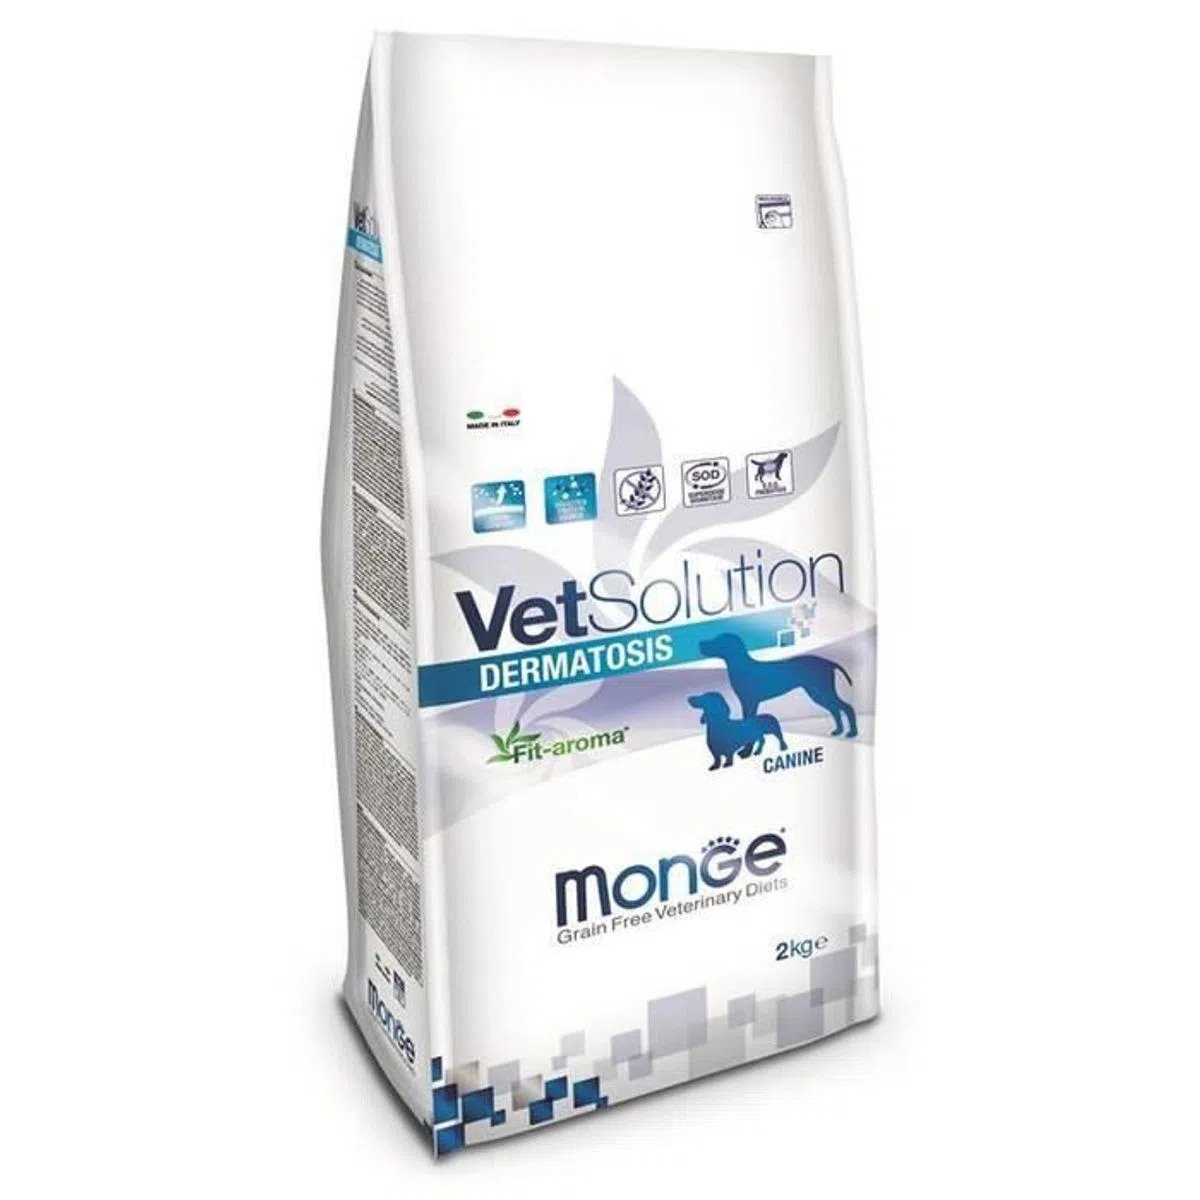 Monge Vetsolution Dermatosis Canine, 2 kg MONGE